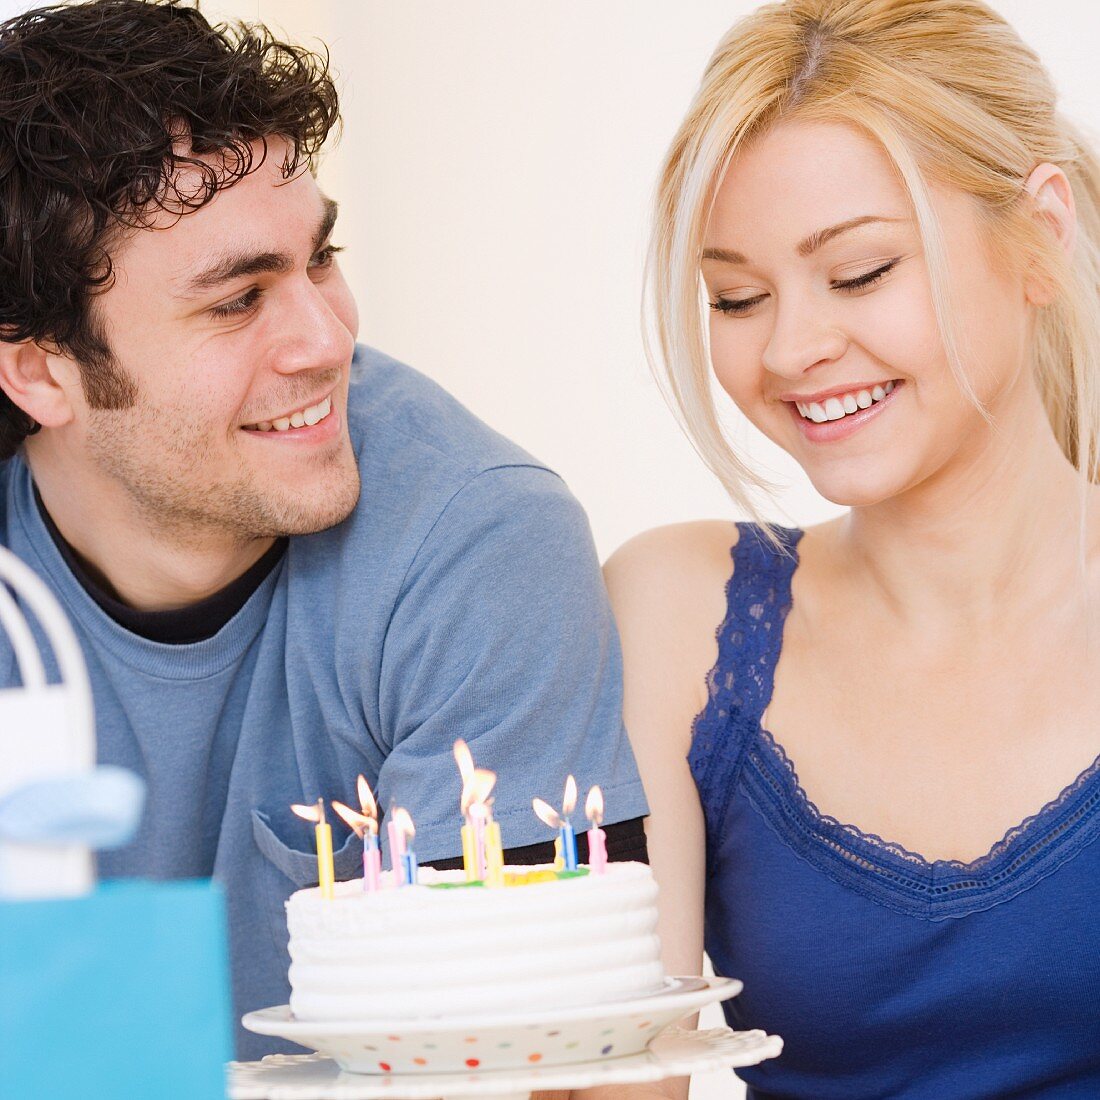 Man watching girlfriend smile at birthday cake